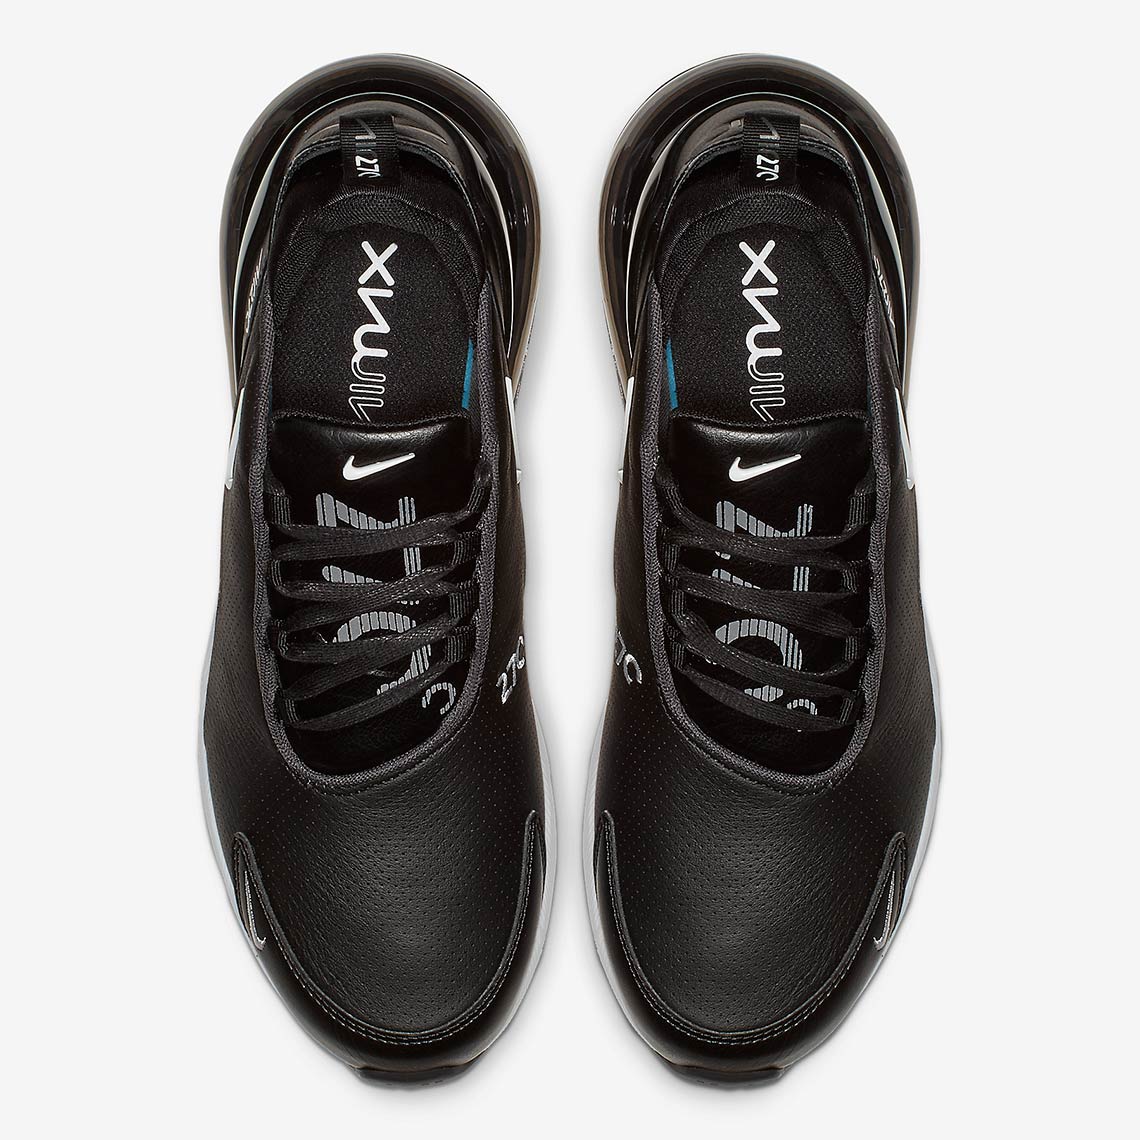 Nike Air Max 270 Leather Black White Bq6171 001 6